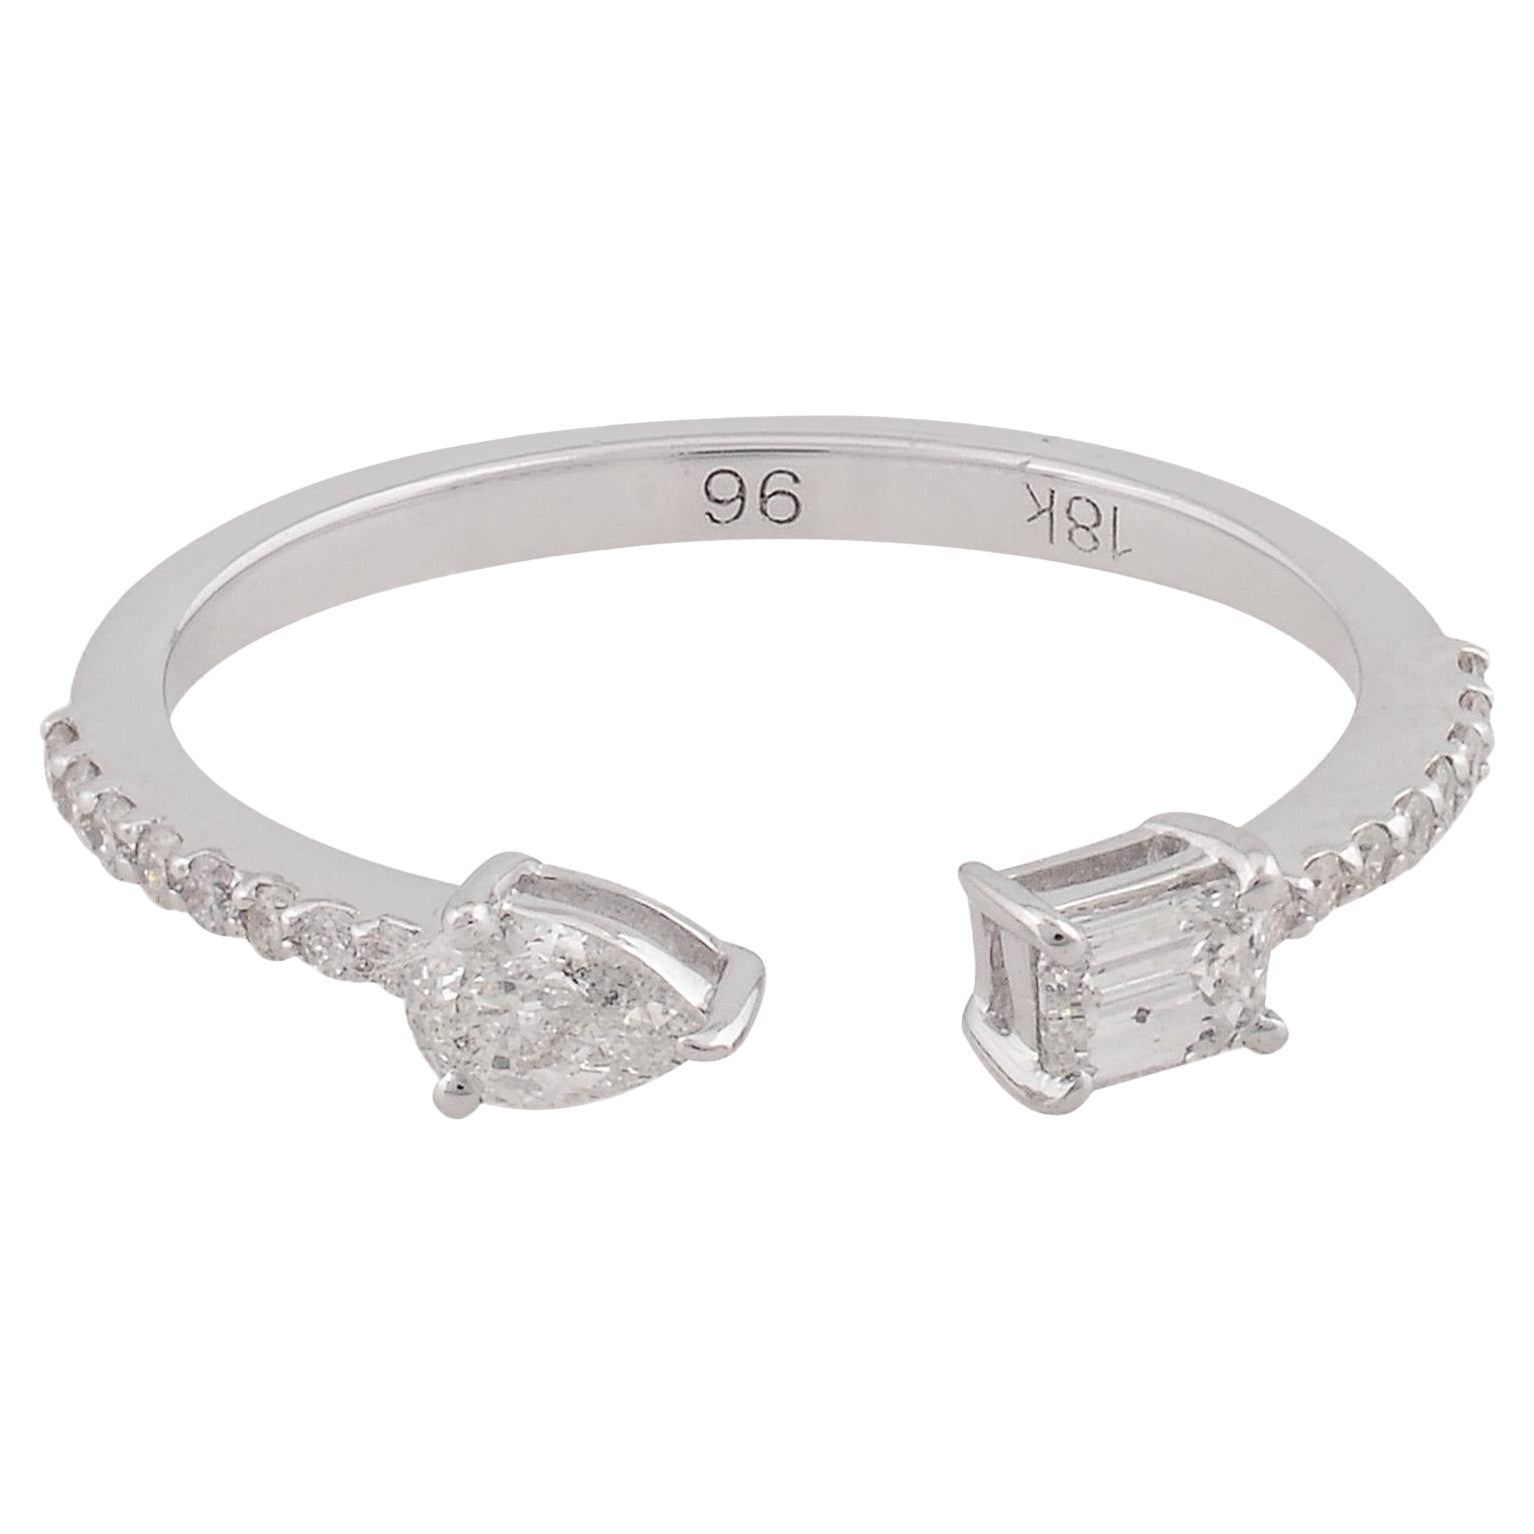 0.41 Carat Pear & Emerald Cut Diamond Cuff Ring 18k White Gold Handmade Jewelry